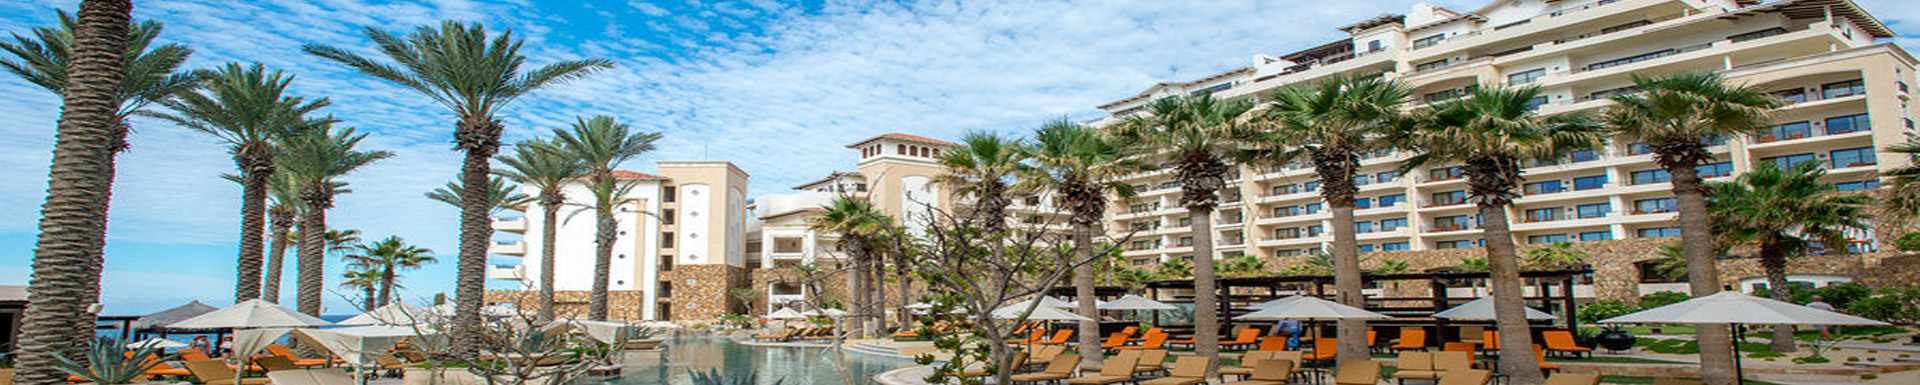 Grand Solmar Land's End Resort & Spa Cabo San Lucas